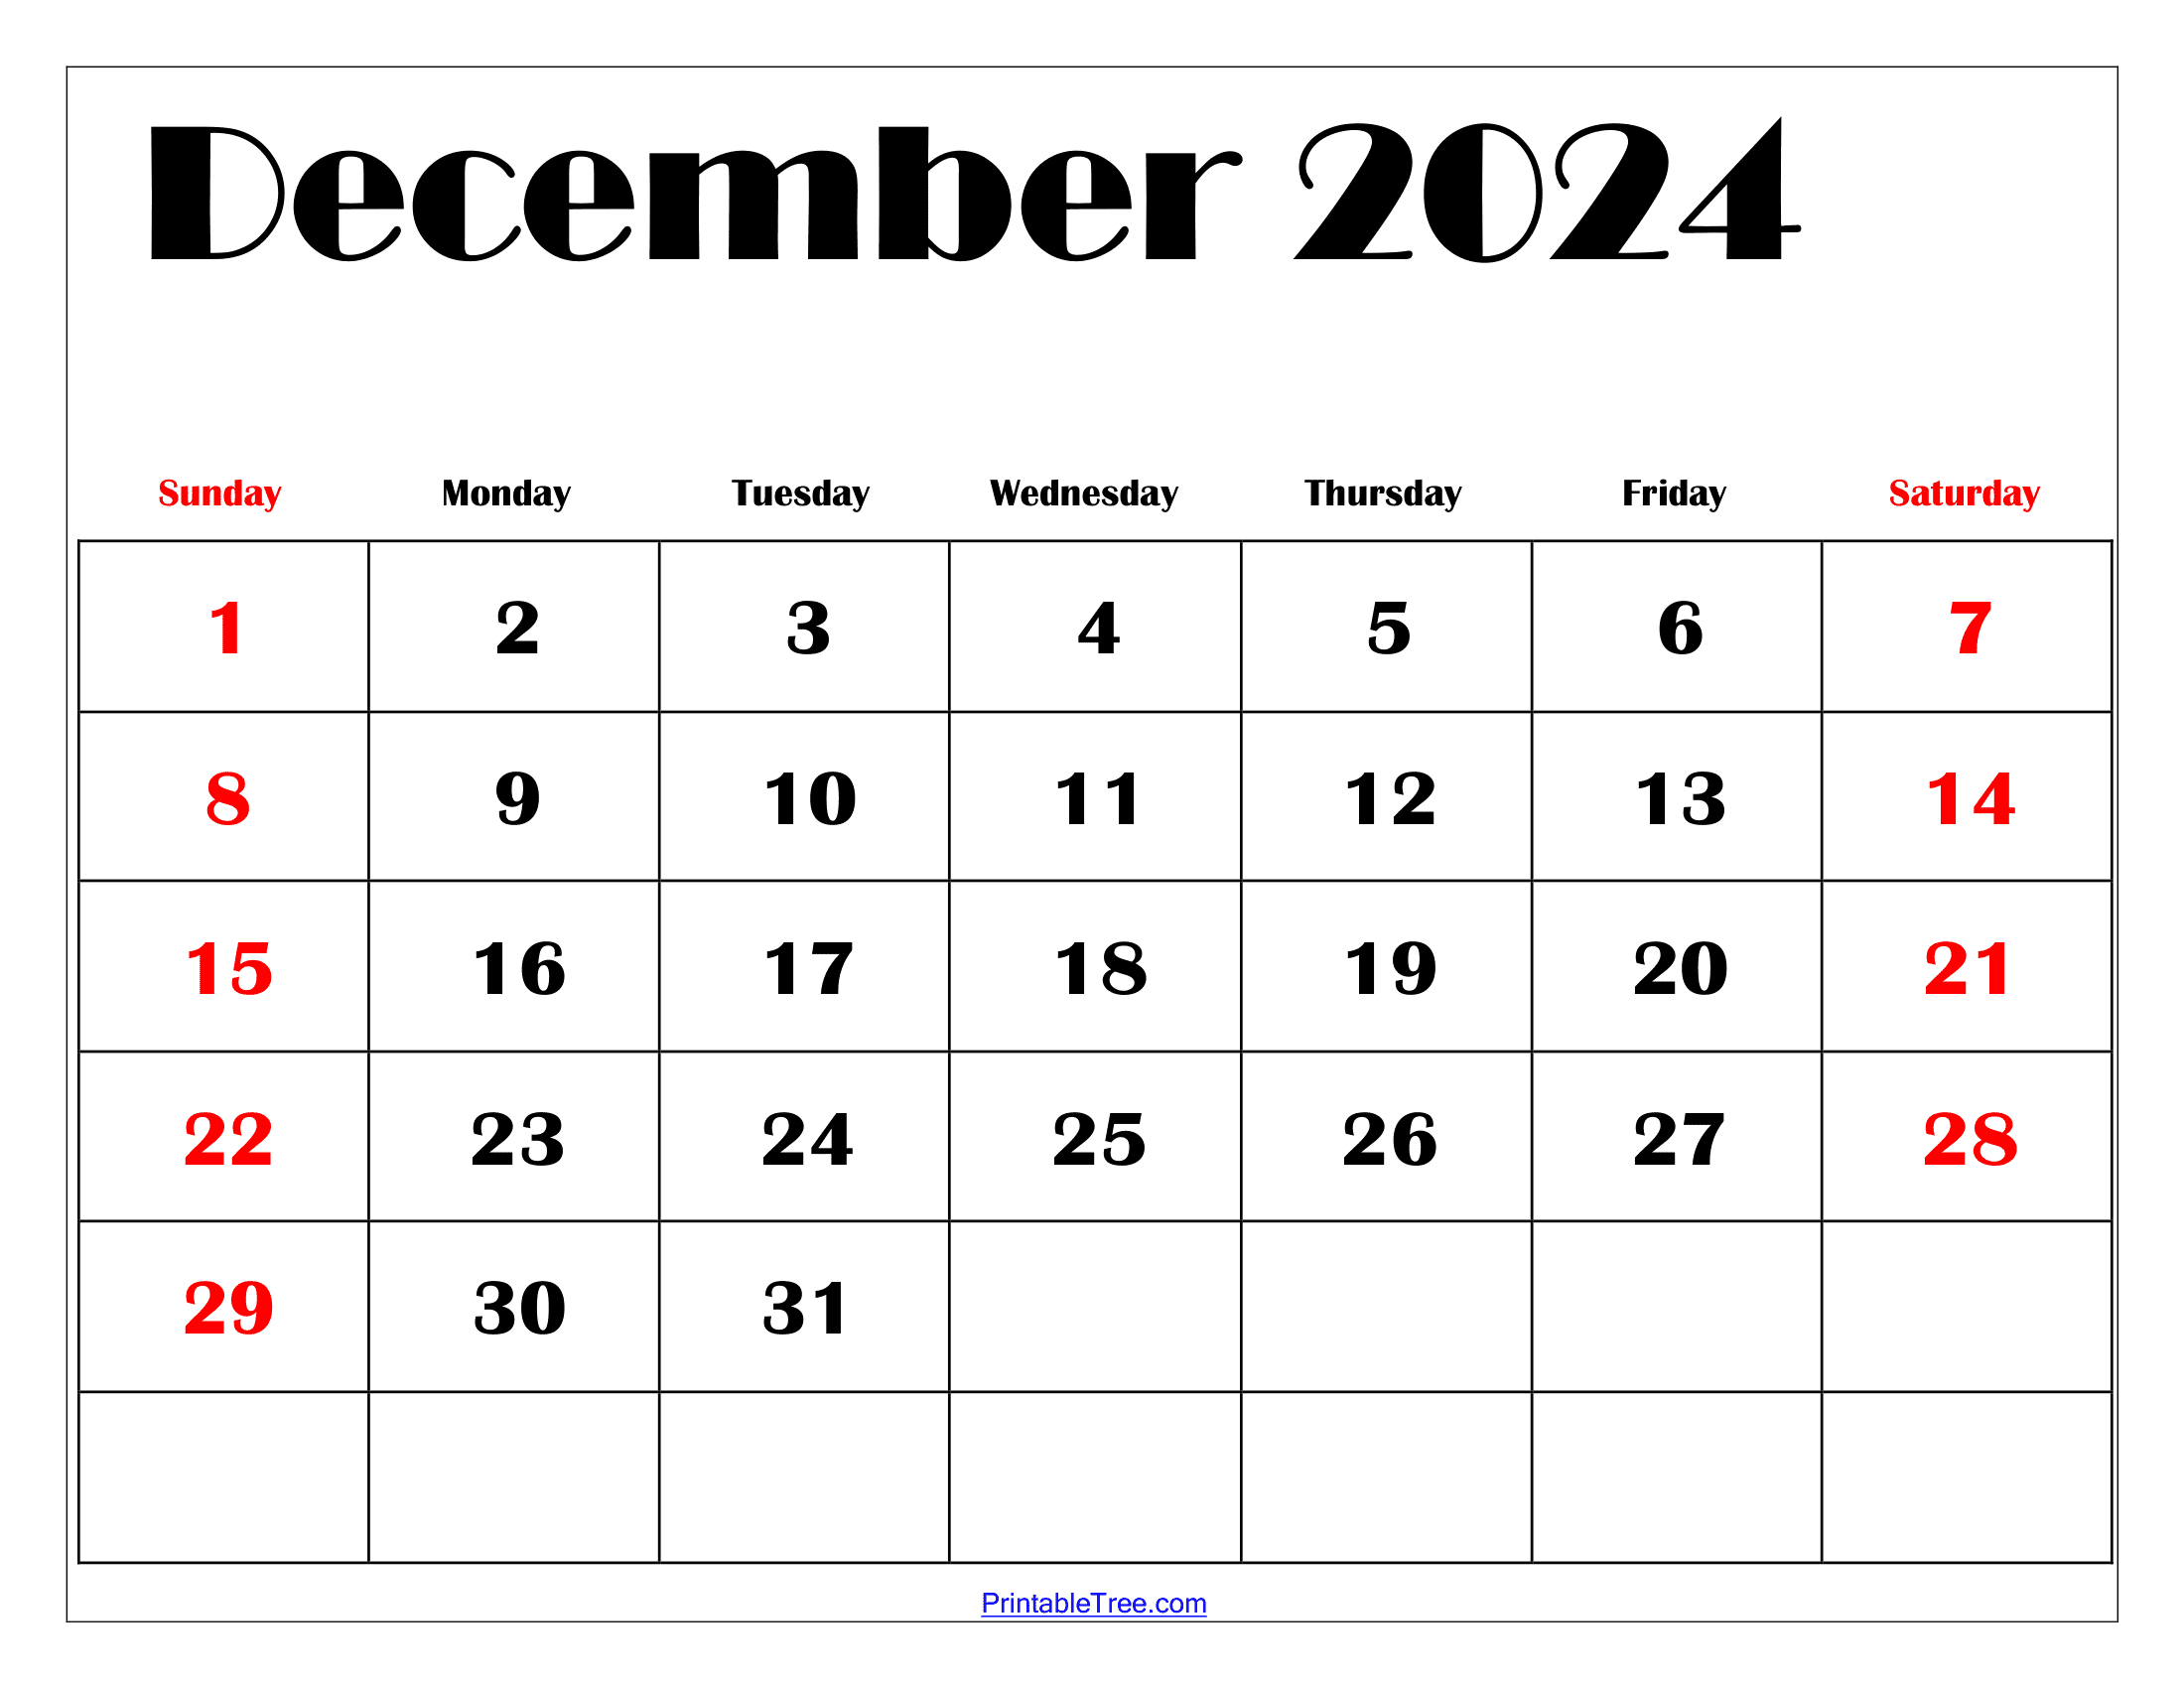 Printable Calendar December 2024 2024 Summer Solstice - Free Printable Calendar 2024 December